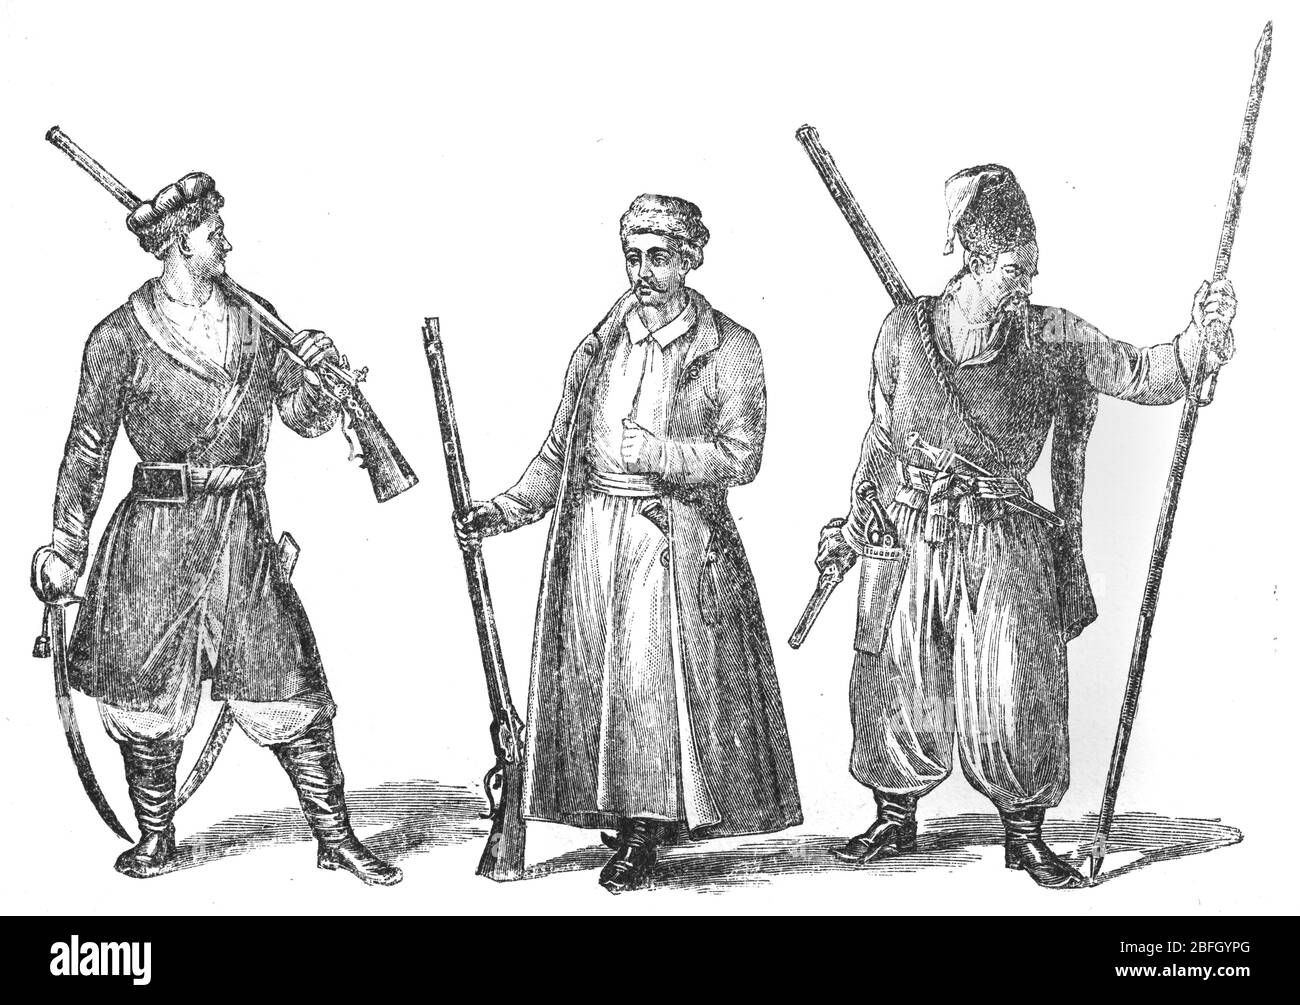 Ukrainian cossack, 17th century, illustration from book dated 1916 Stock Photo